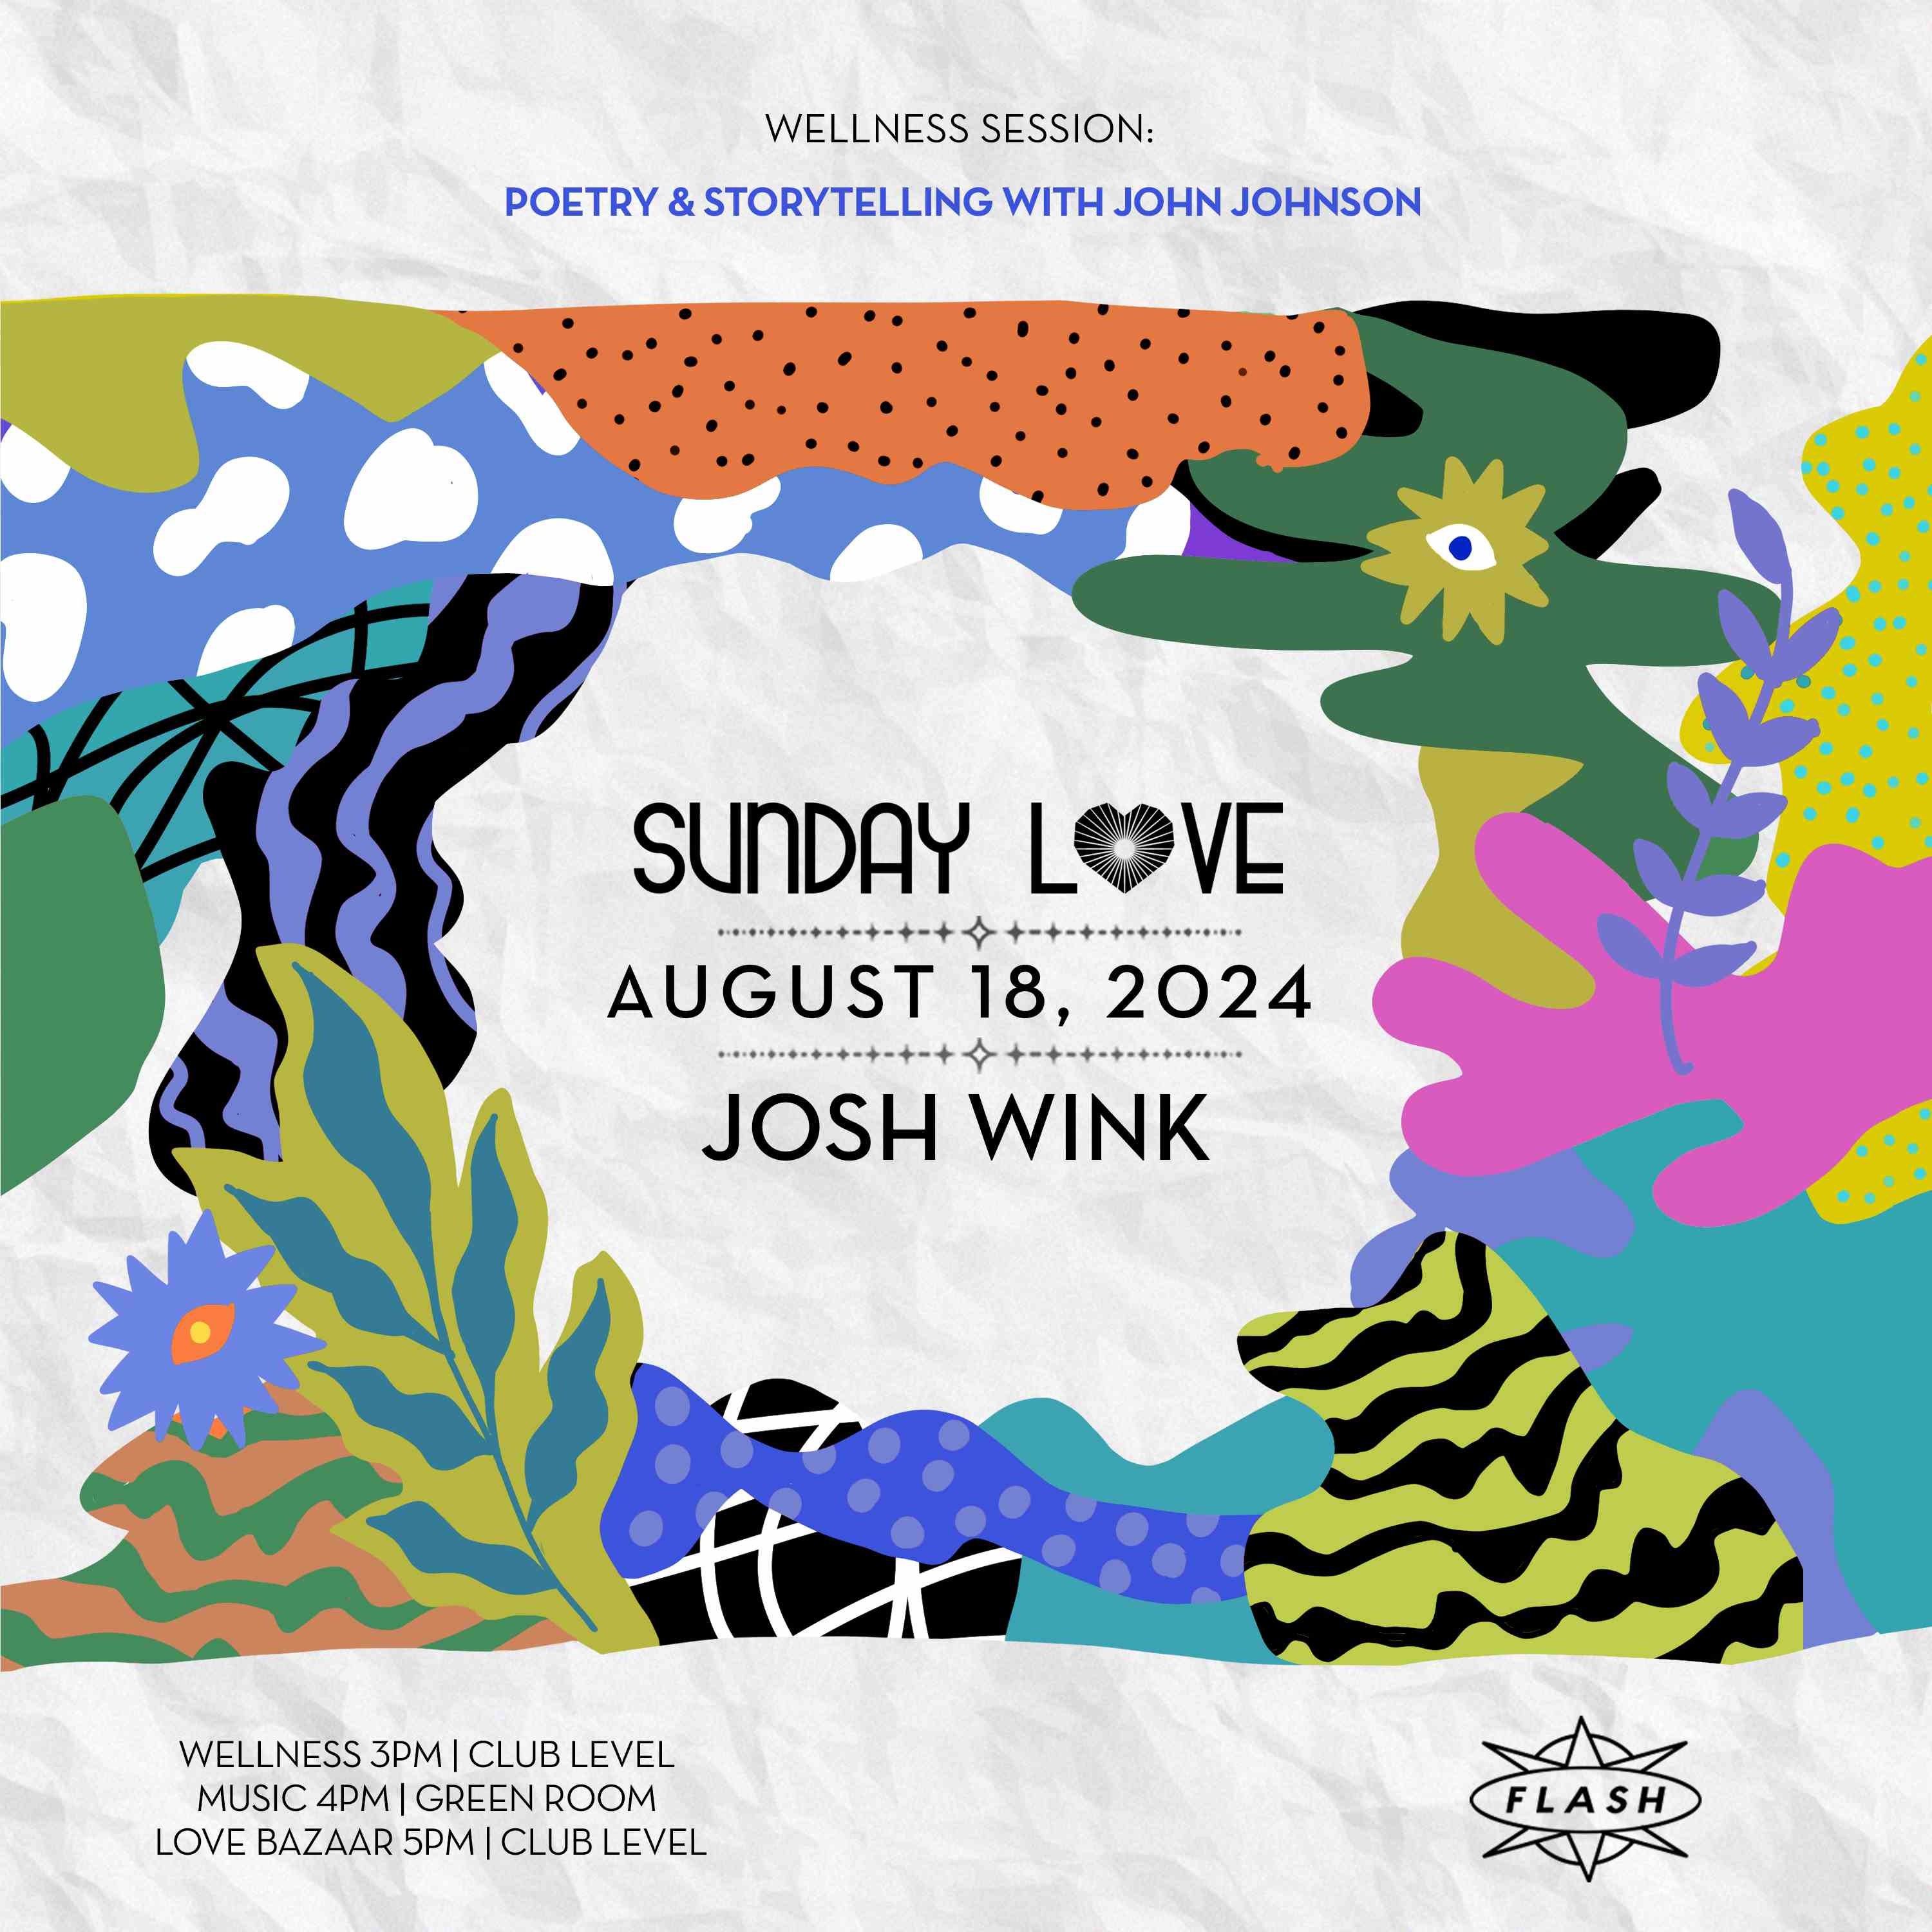 Sunday Love: Josh Wink event flyer